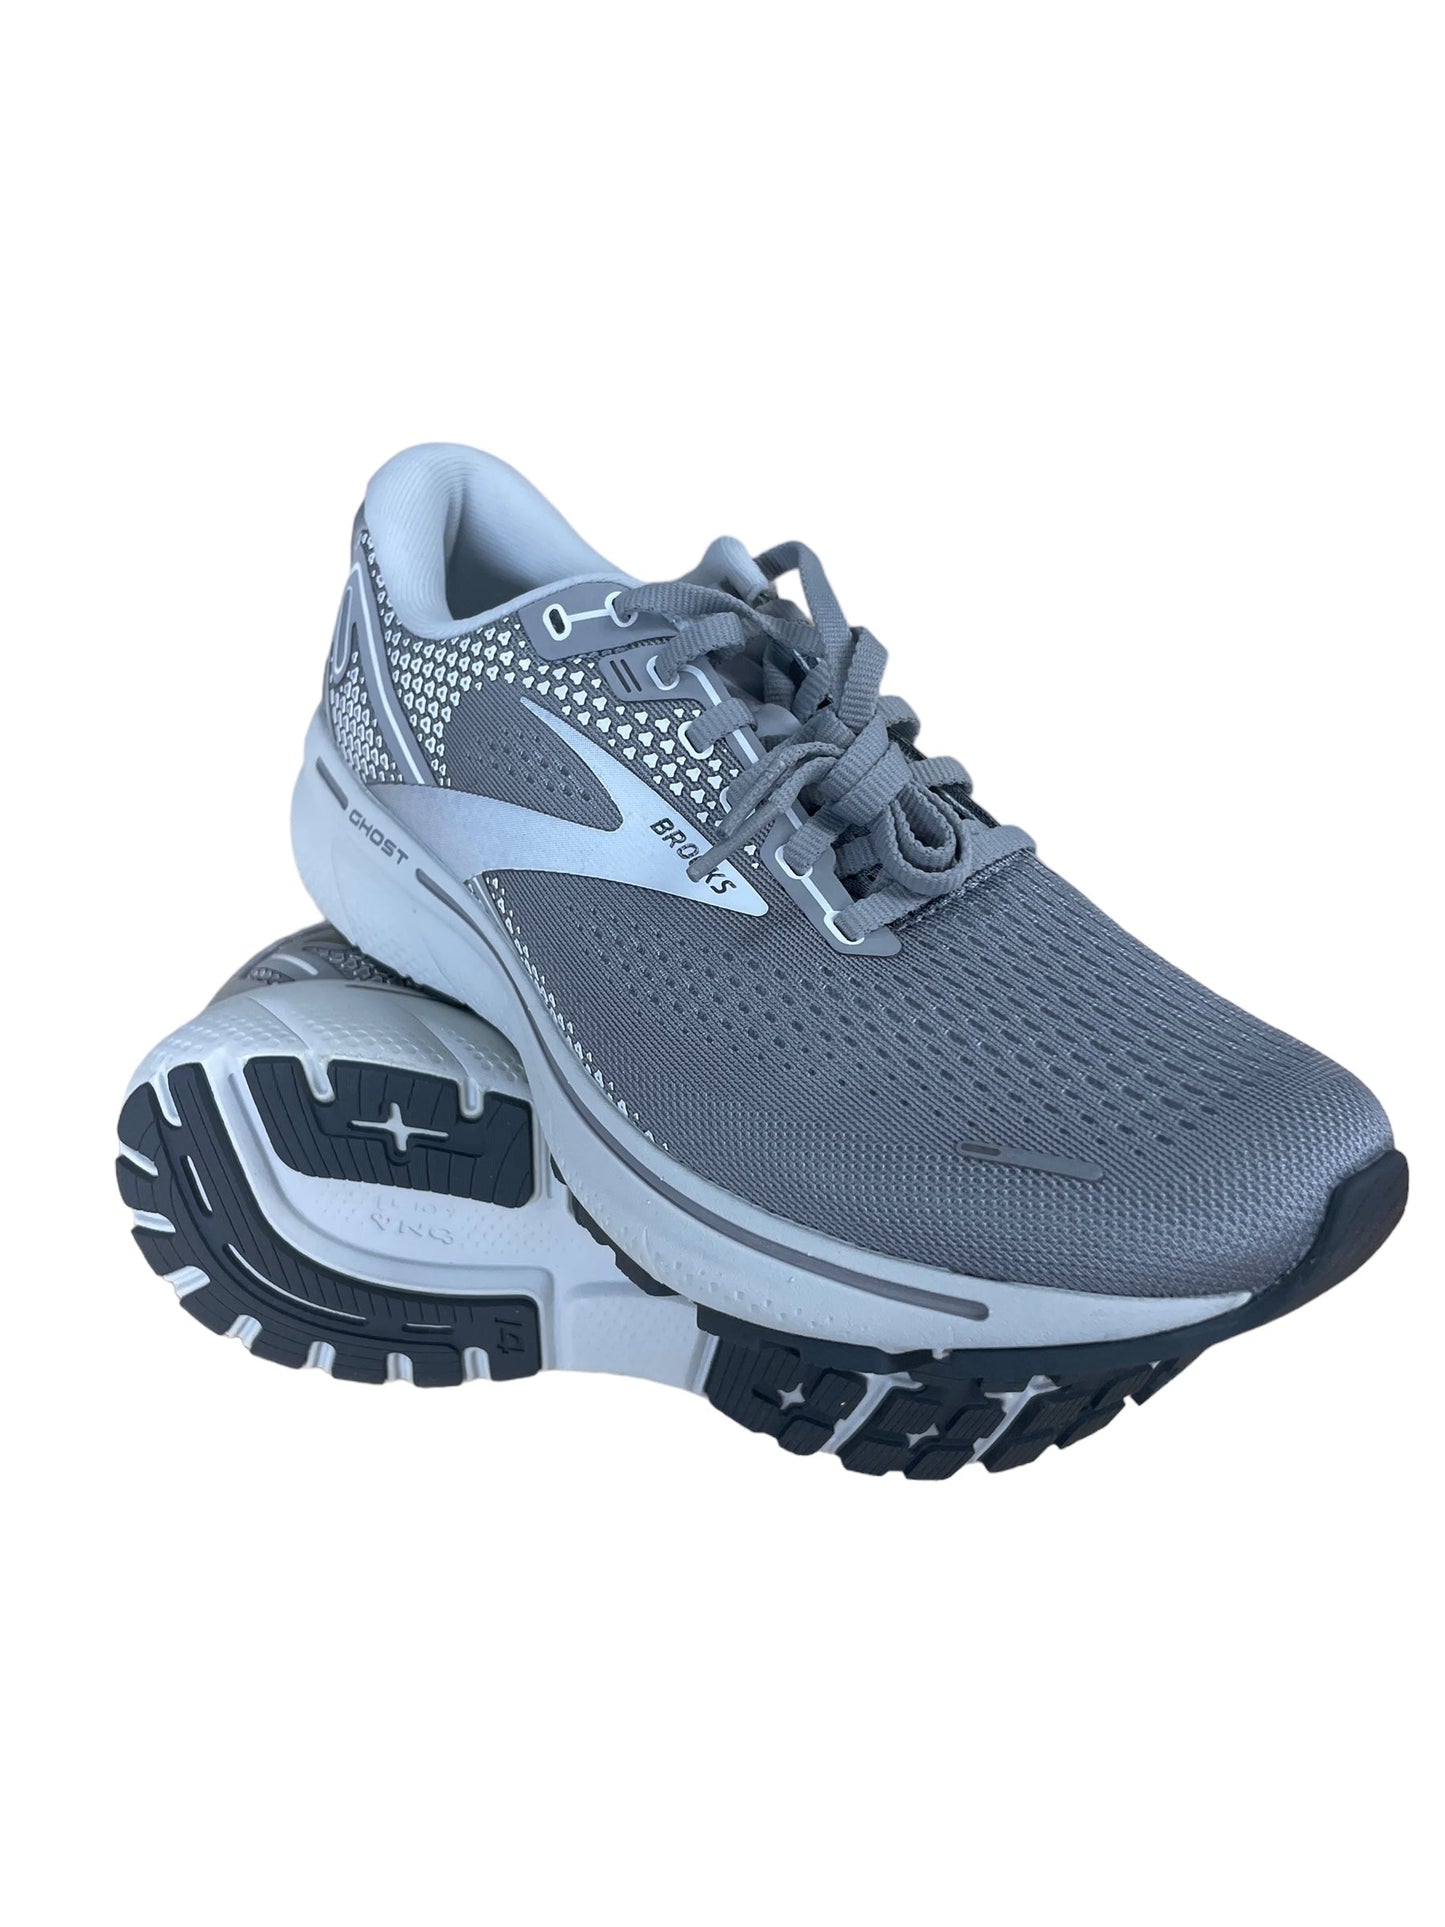 Grey Shoes Athletic Brooks, Size 10.5